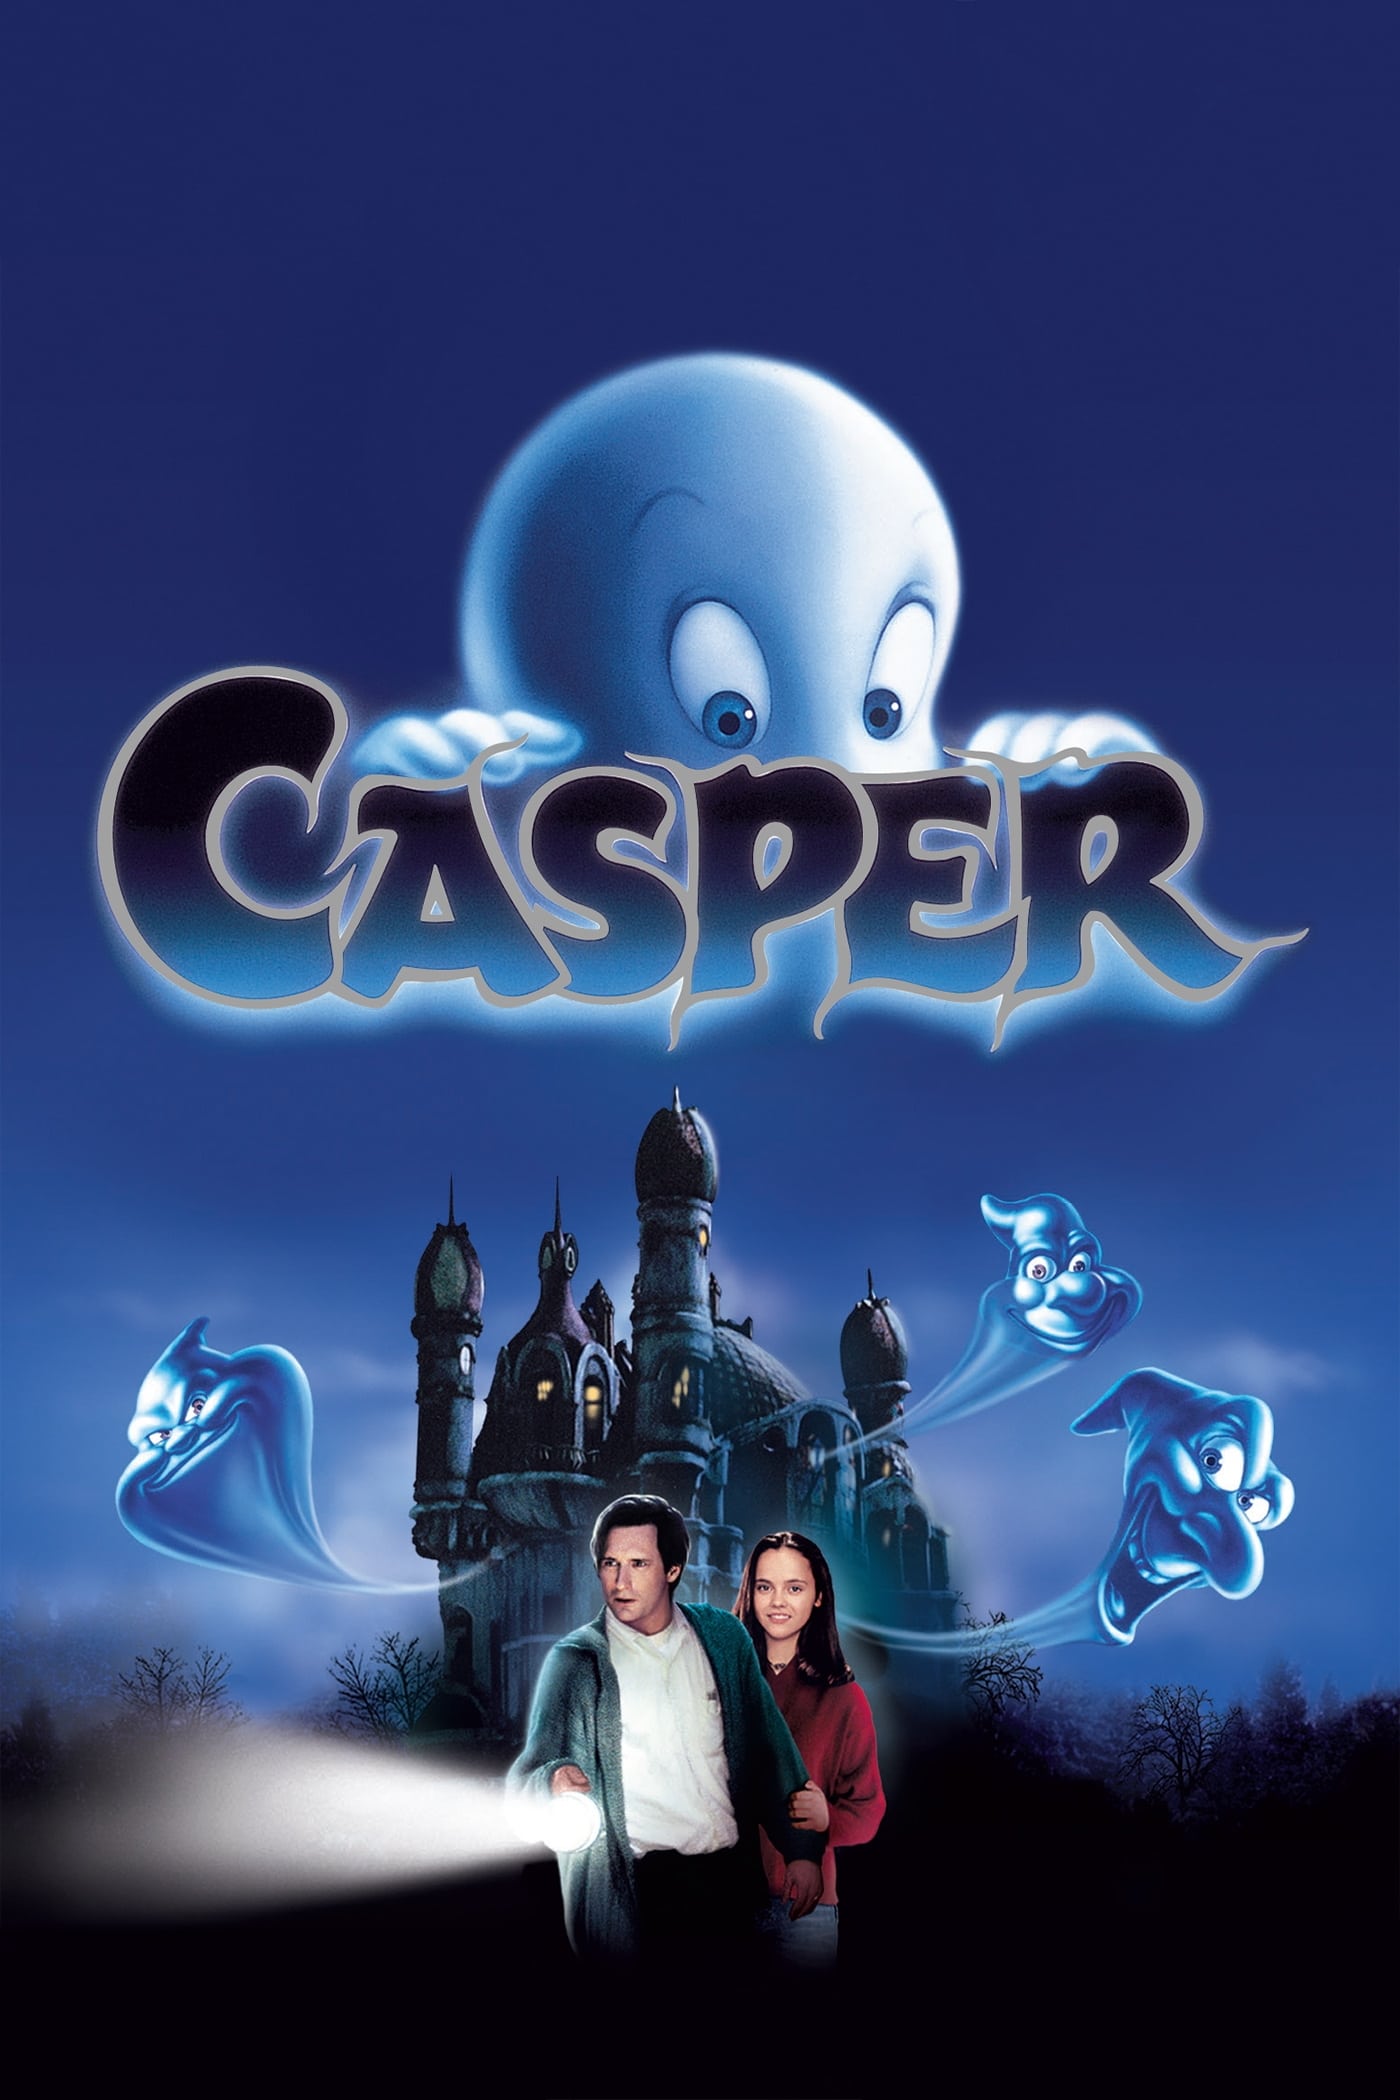 where can i find casper the friendly ghost movie